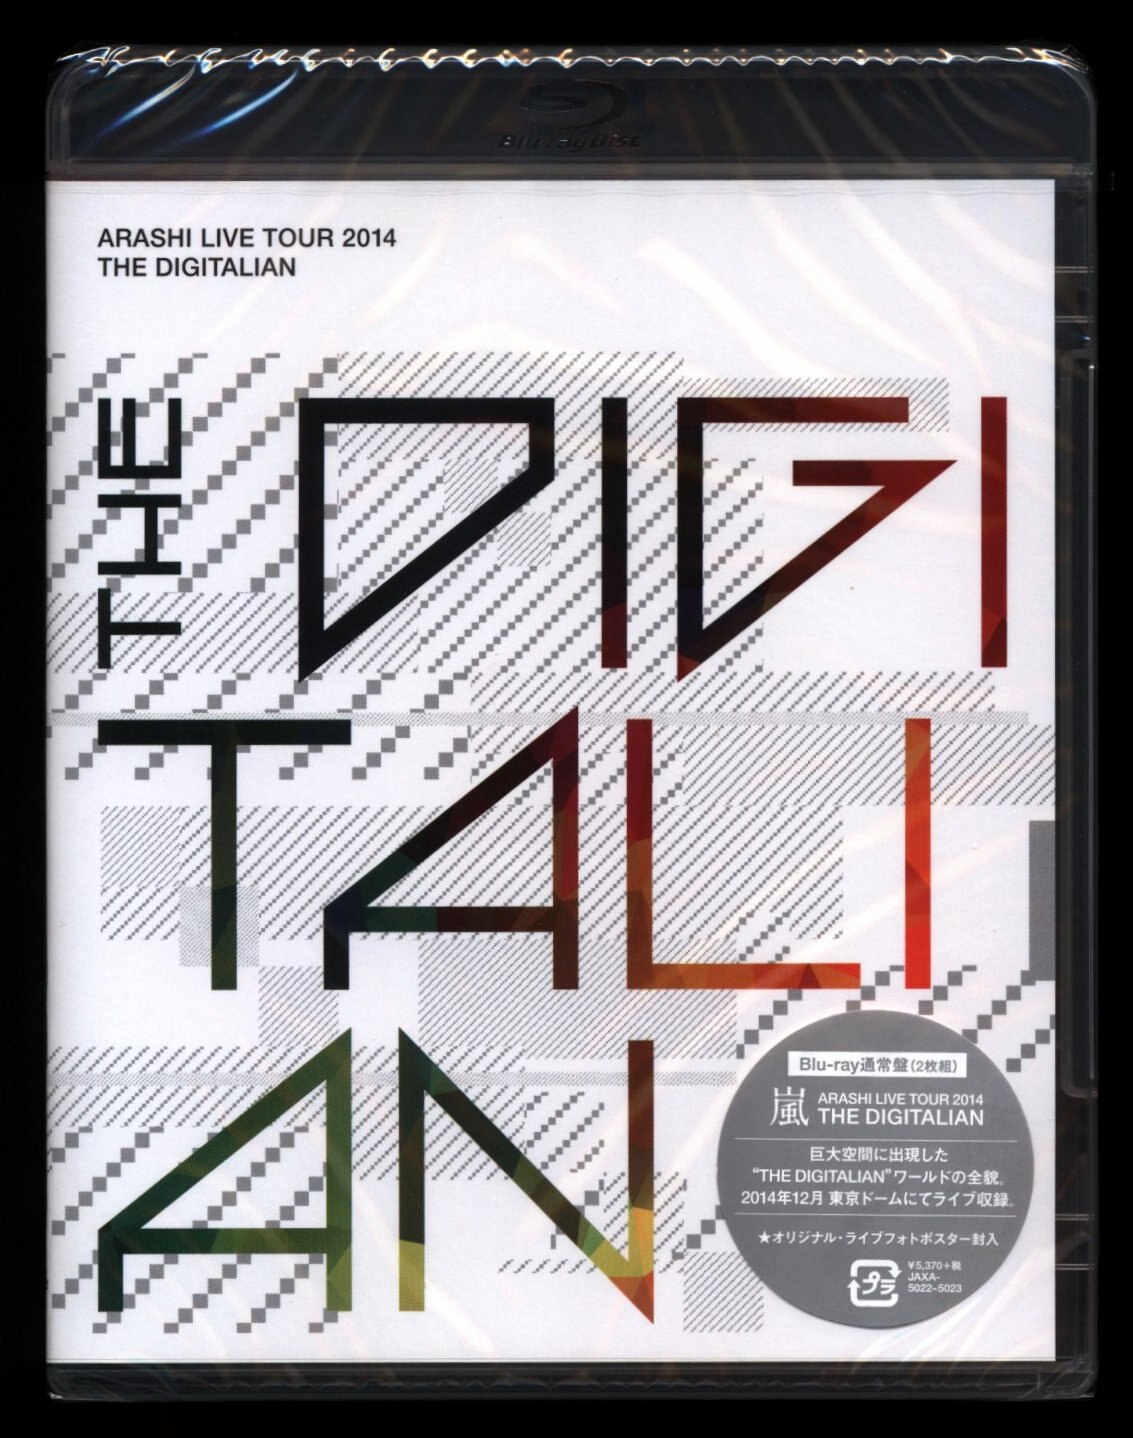 Arashi Blu-ray Normal Edition THE DIGITALIAN ※ Unopened MANDARAKE 在线商店